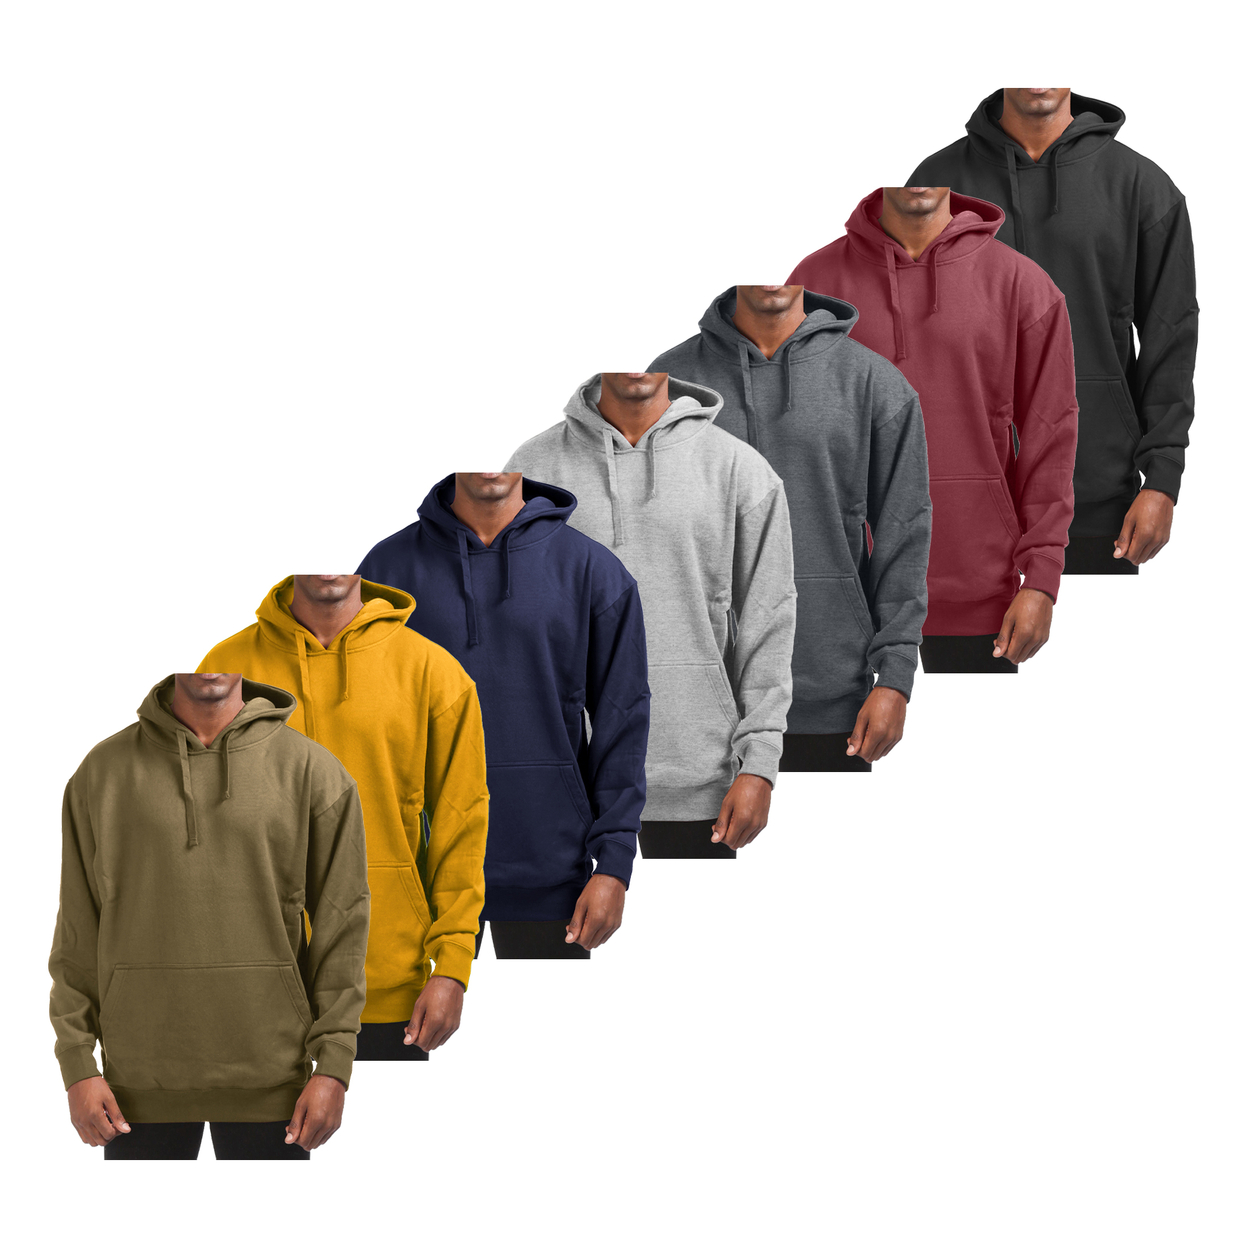 2-Pack: Men's Super-Soft Winter Warm Cotton-Blend Fleece Pullover Hoodie With Kangaroo Pocket - Black & Red, Xx-large